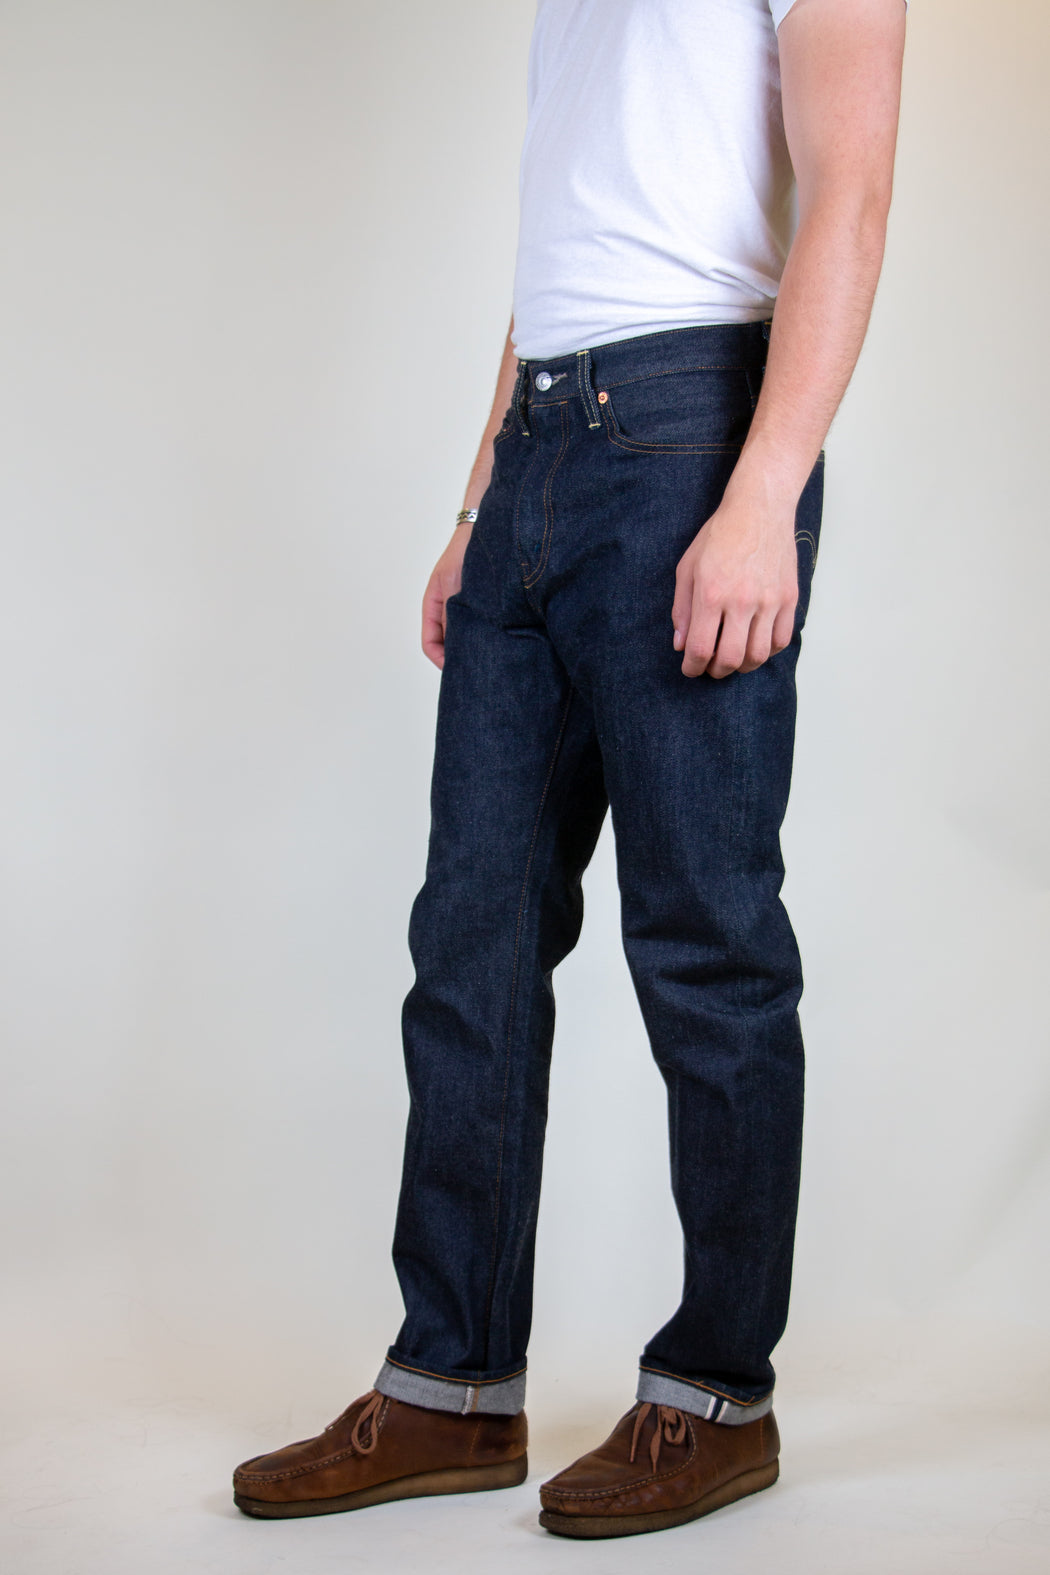 vintage men's jeans